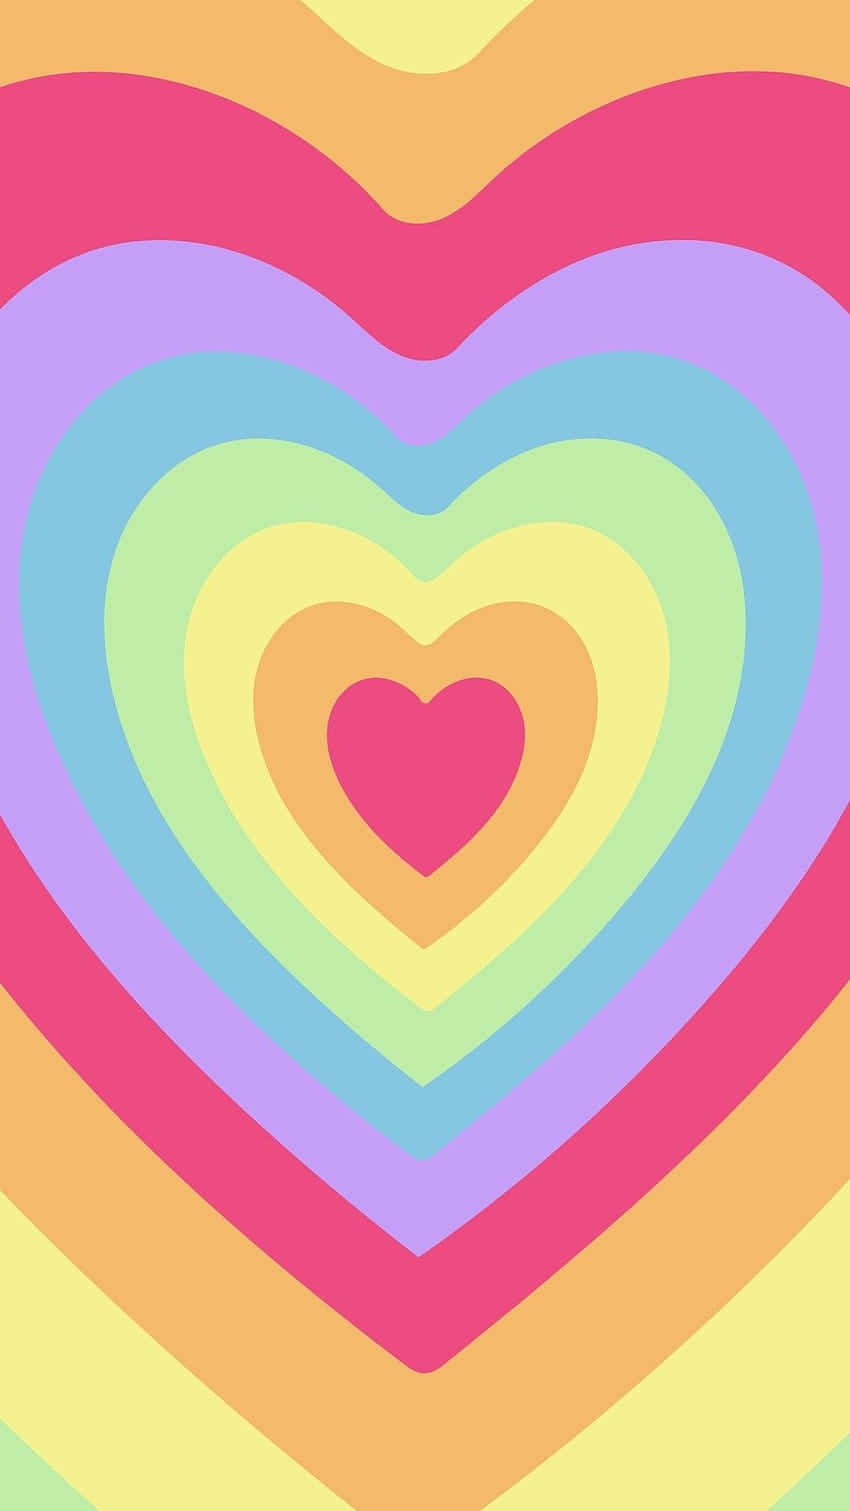 Heart-shaped Aesthetic Rainbow Mobile Wallpaper